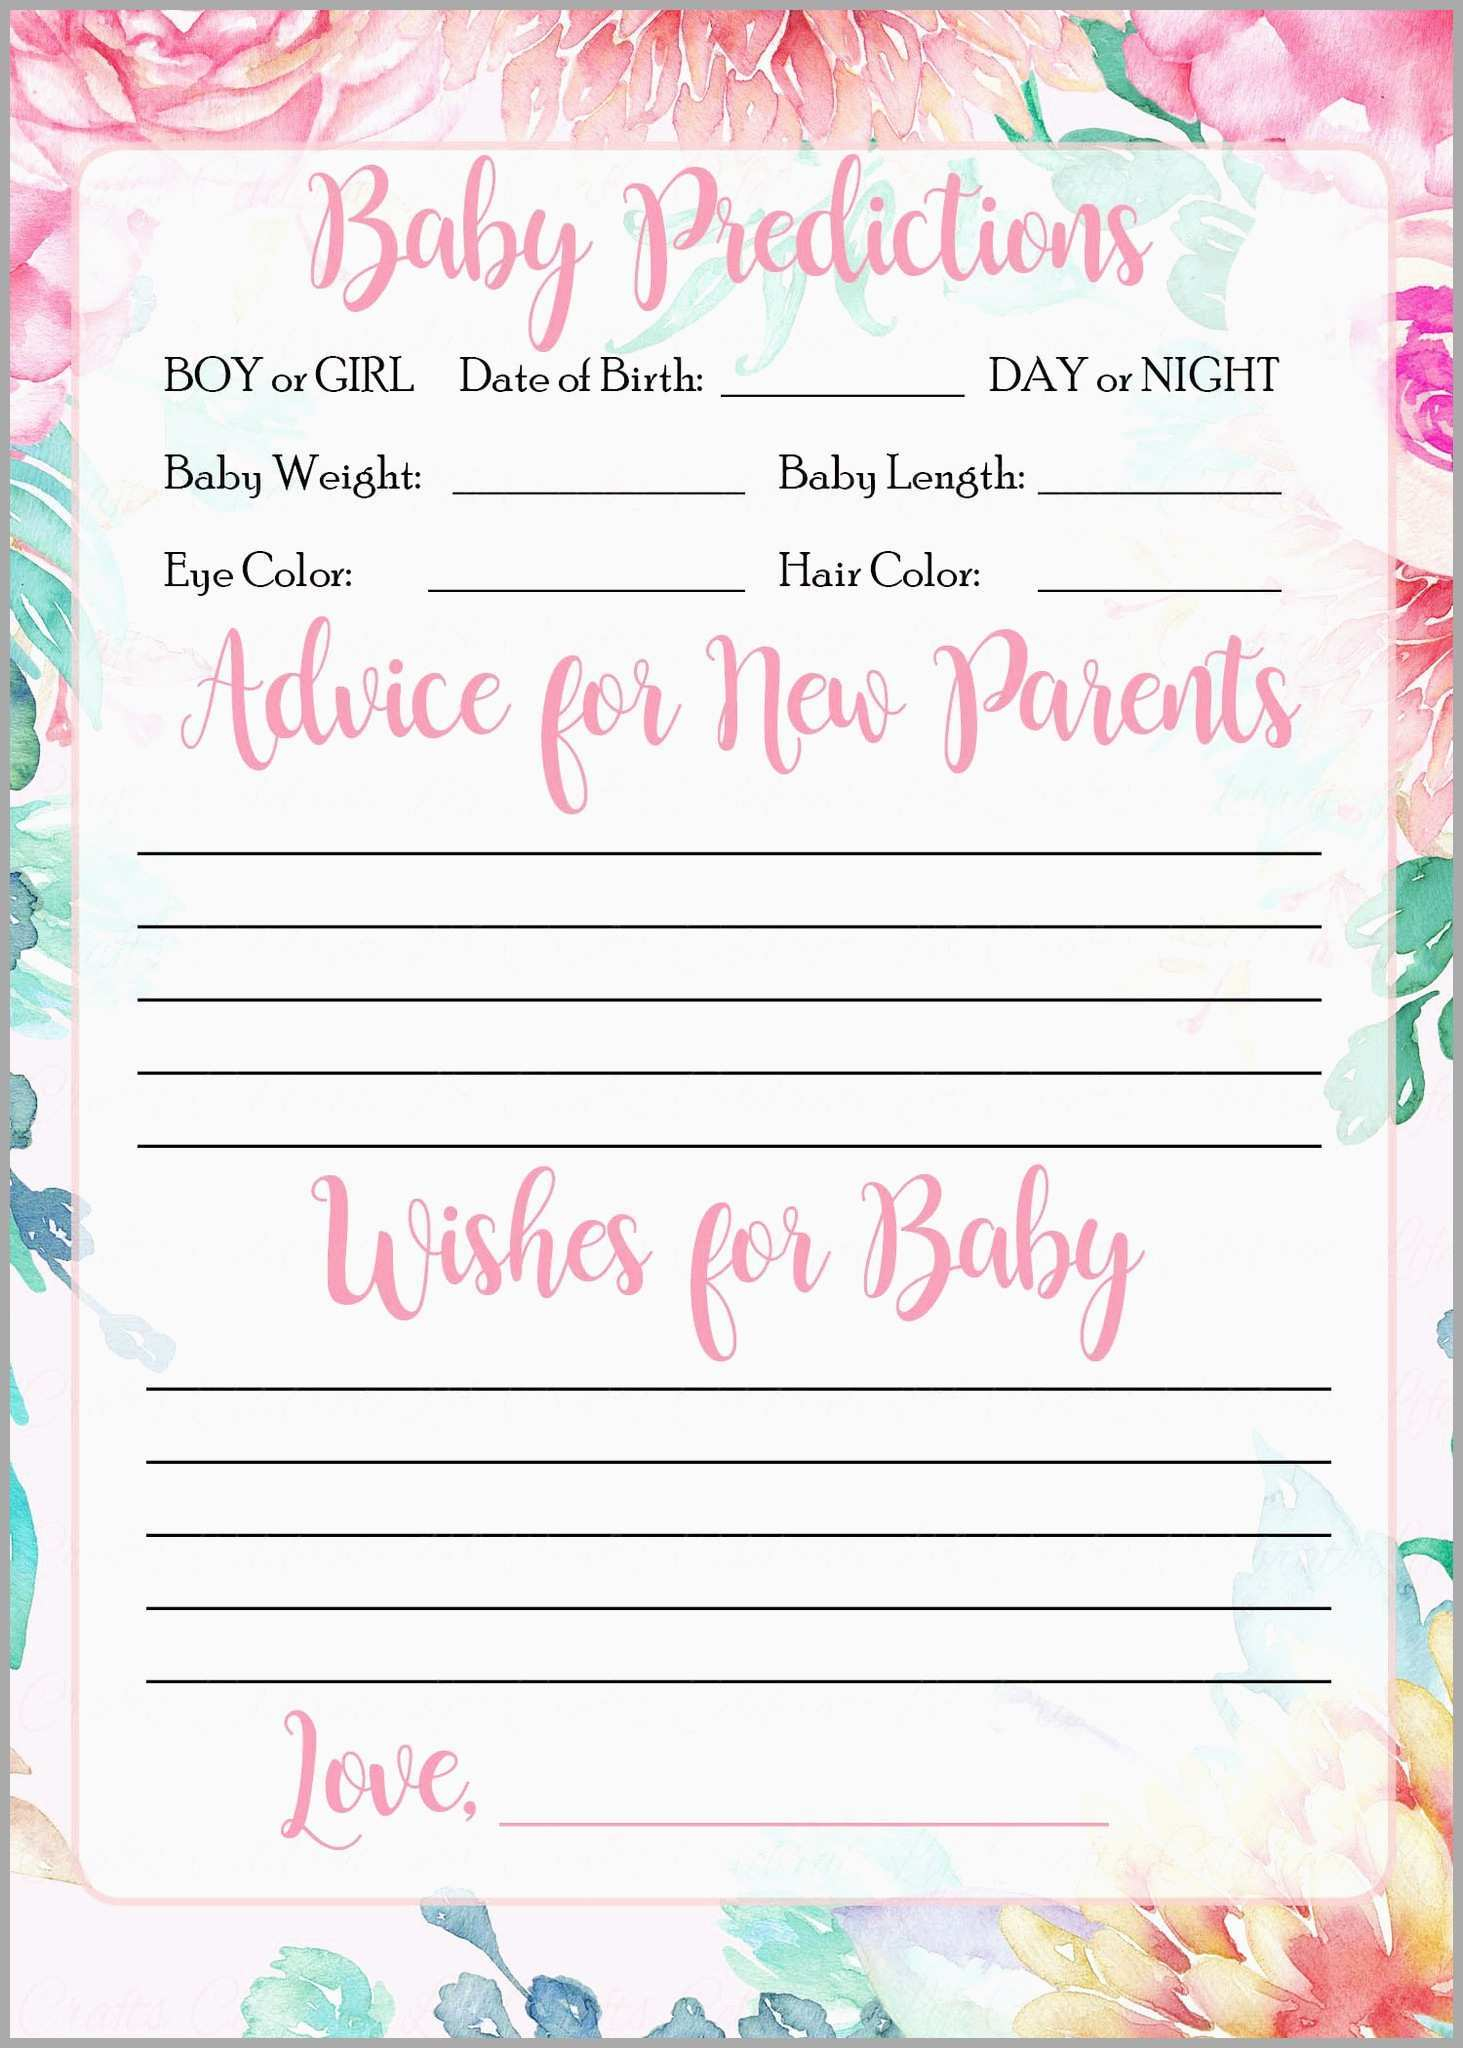 Free Printable Baby Shower Advice Cards Fresh Mommy Advice Cards - Baby Prediction And Advice Cards Free Printable